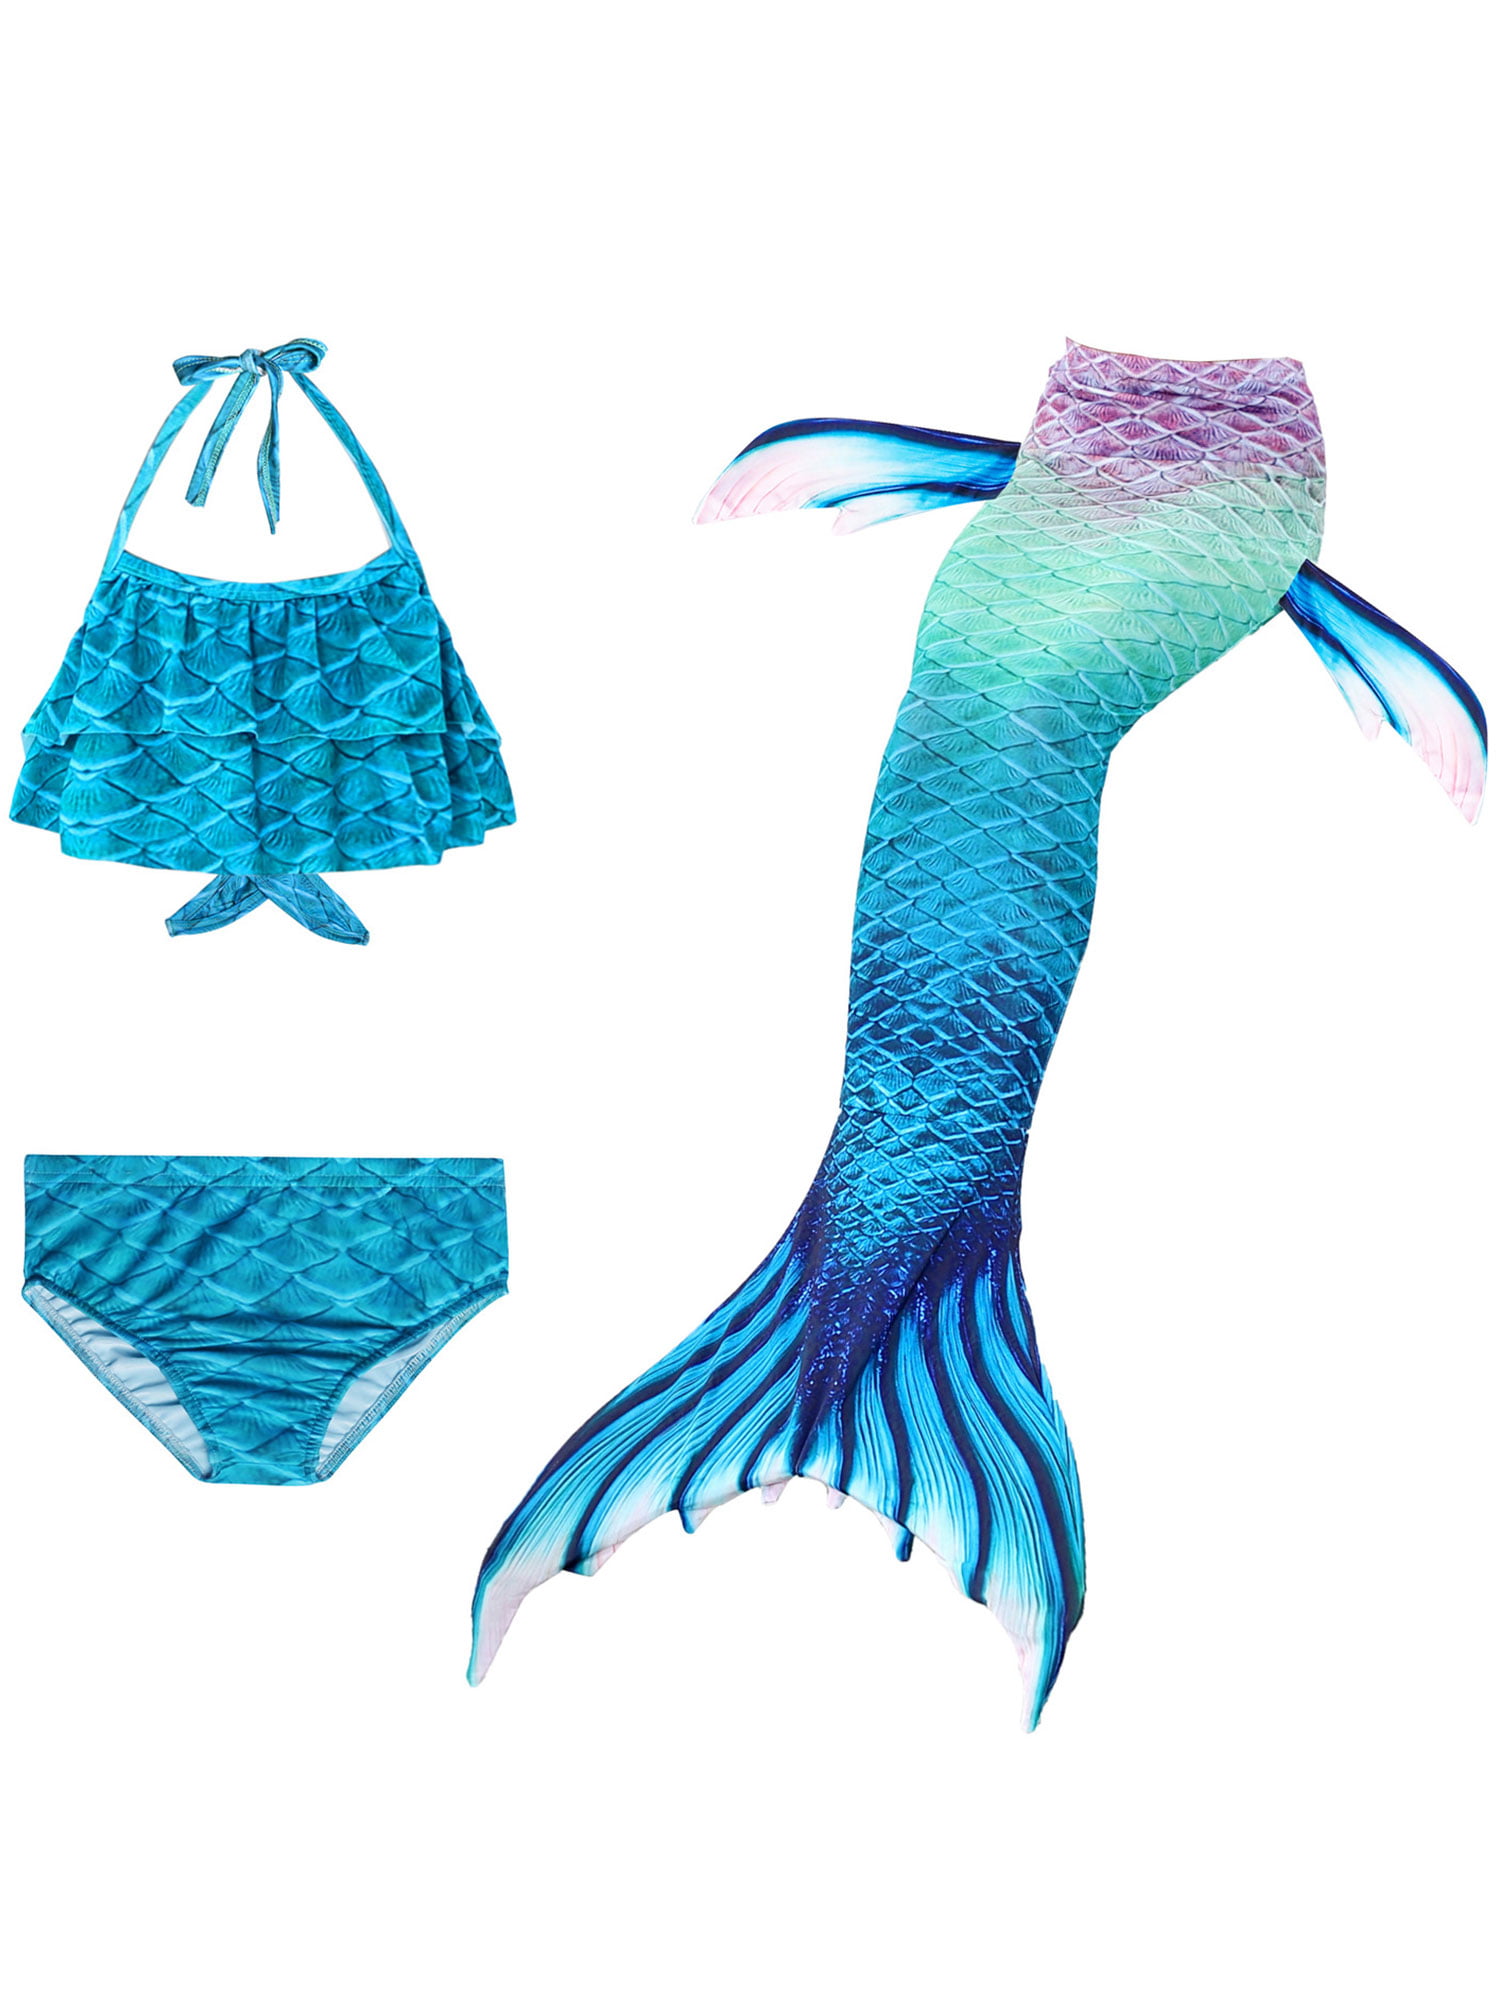 Mermaid Tail Swimsuit with Monofin Girls Boys Swimwear Bikini Set